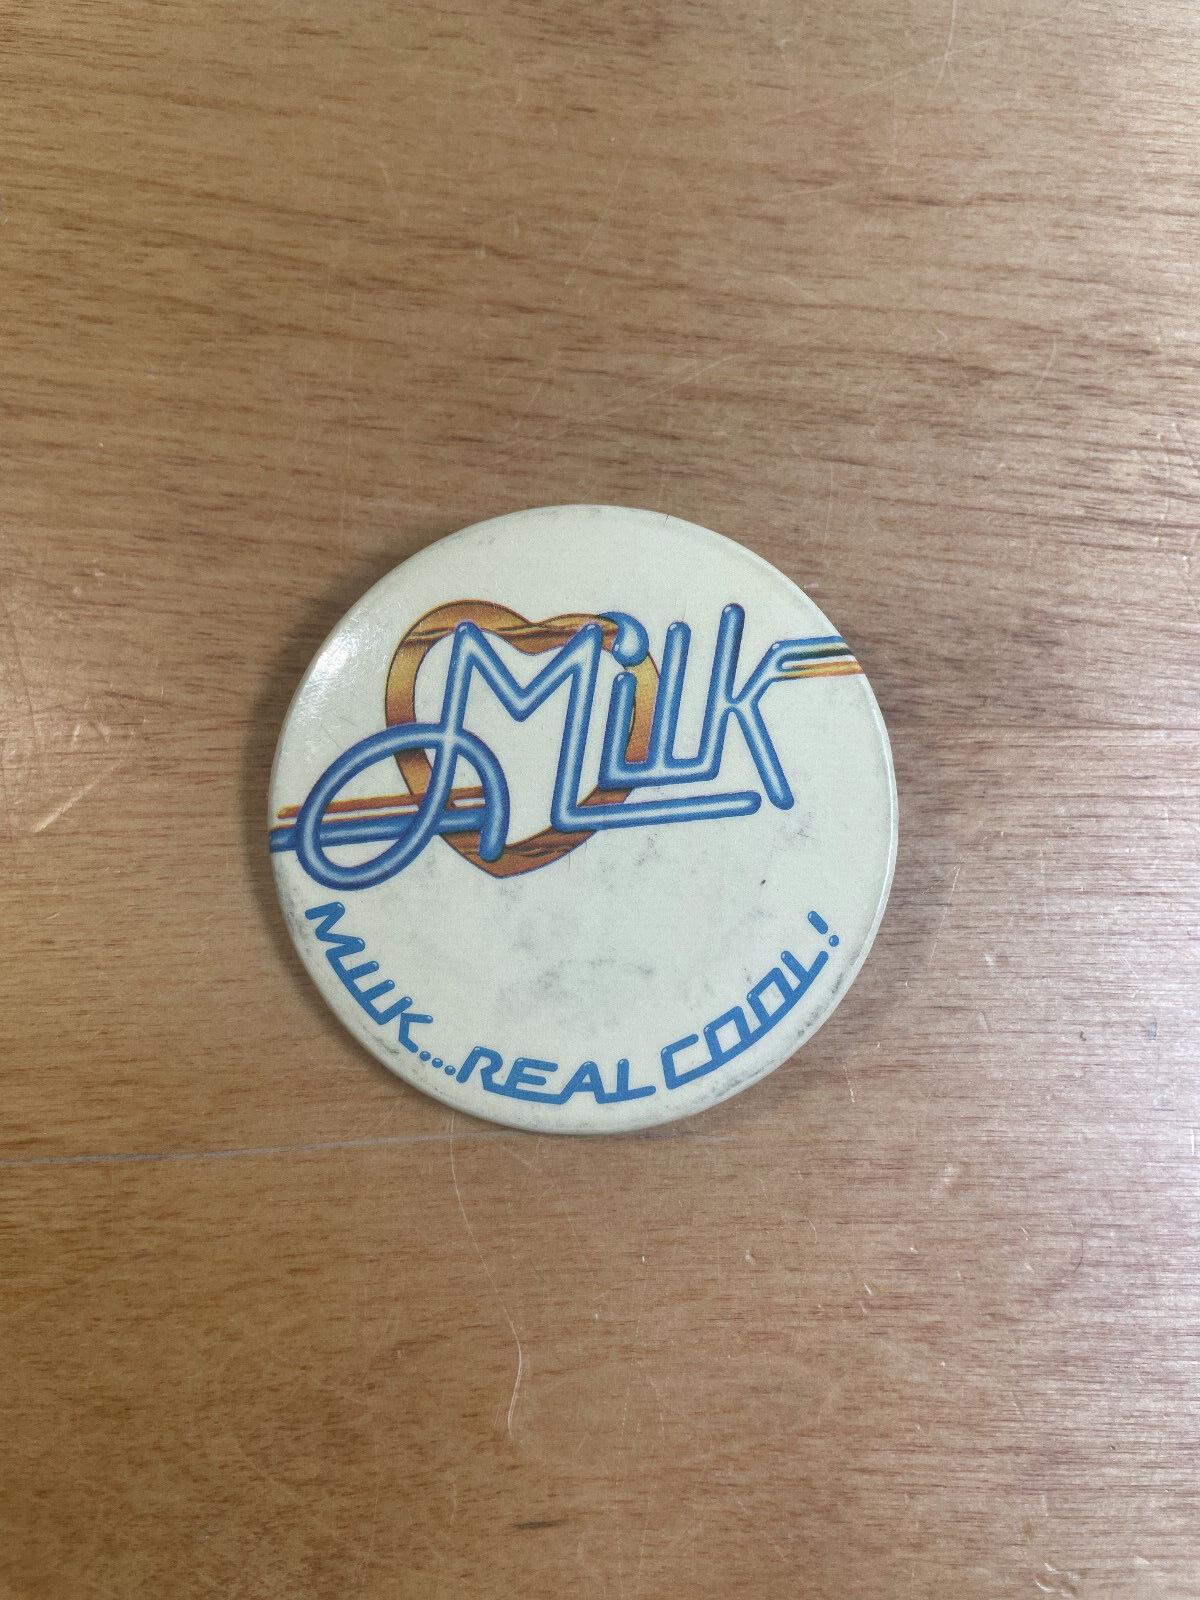 Milk Real Cool Heart Image Graphic Marketing Vintage Metal Pinback Pin Button